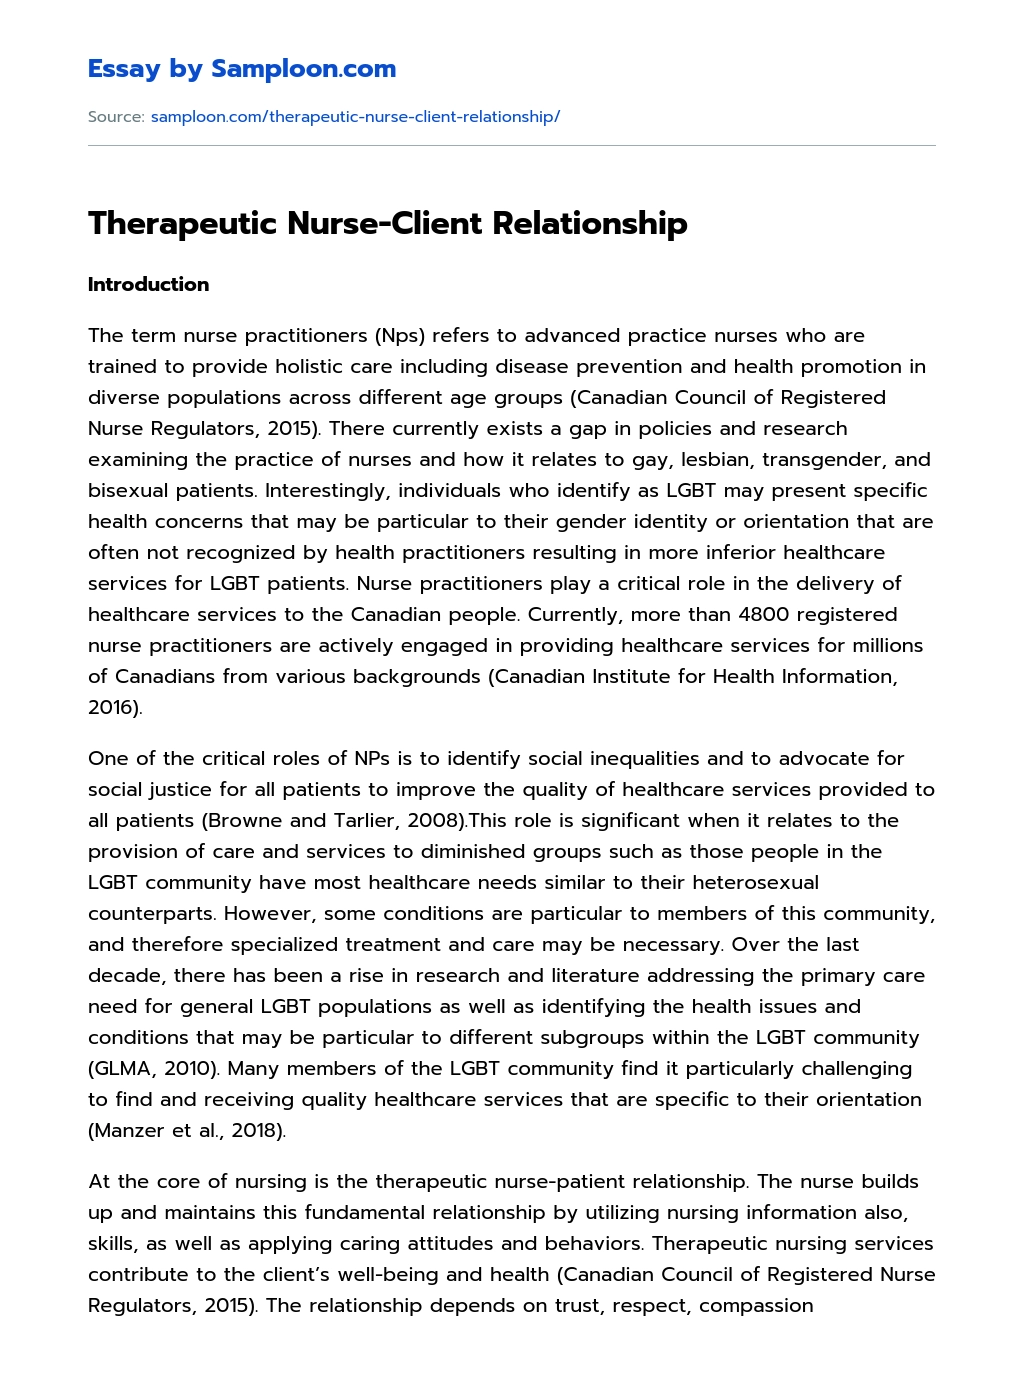 Therapeutic Nurse-Client Relationship essay